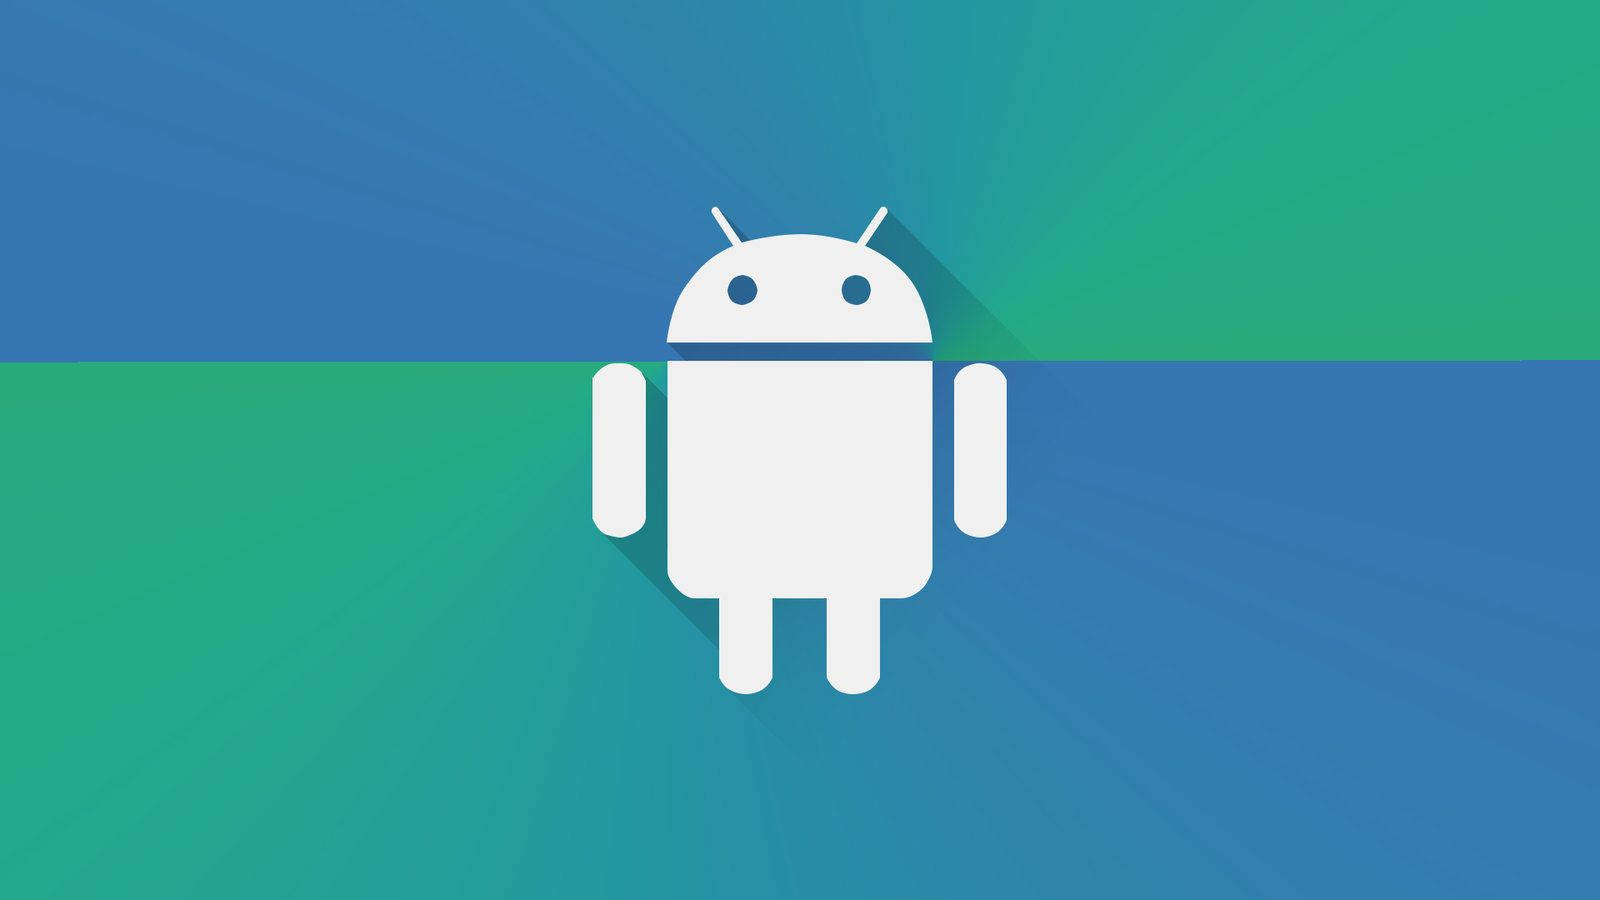 Free Android Developer Wallpaper Downloads, [100+] Android Developer  Wallpapers for FREE 